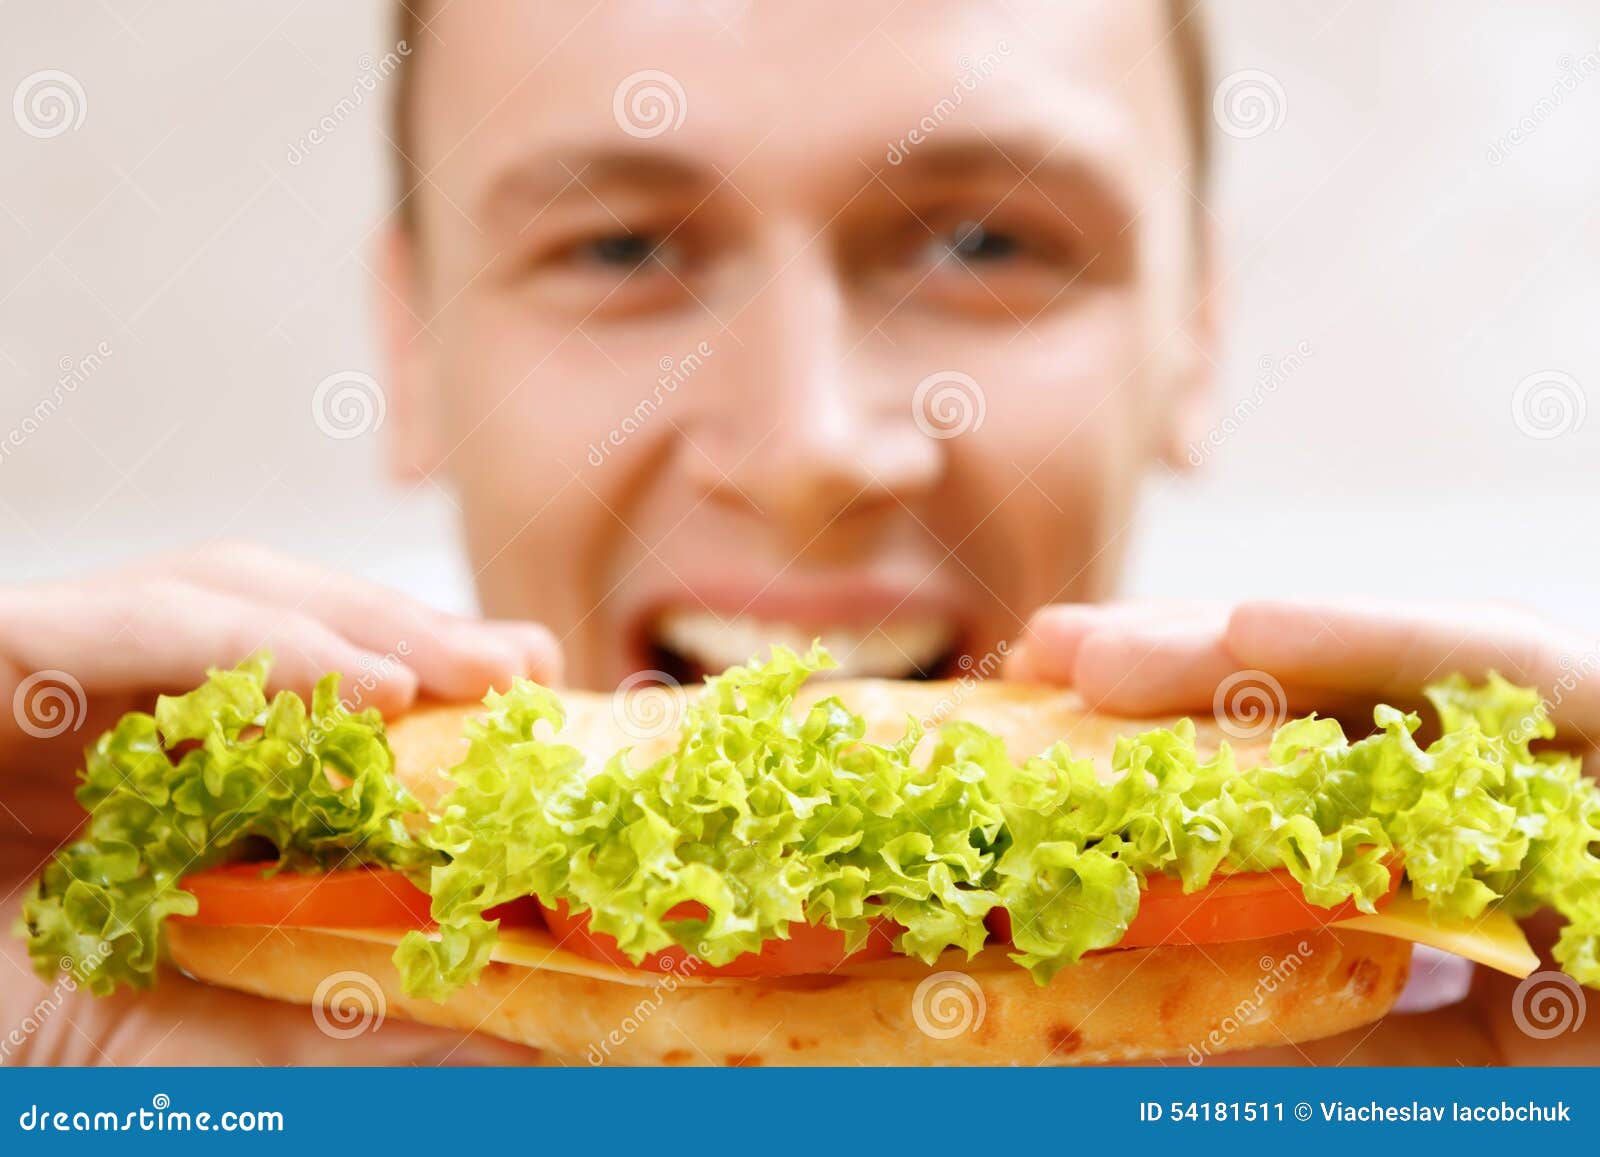 close up of man taking bite sandwich